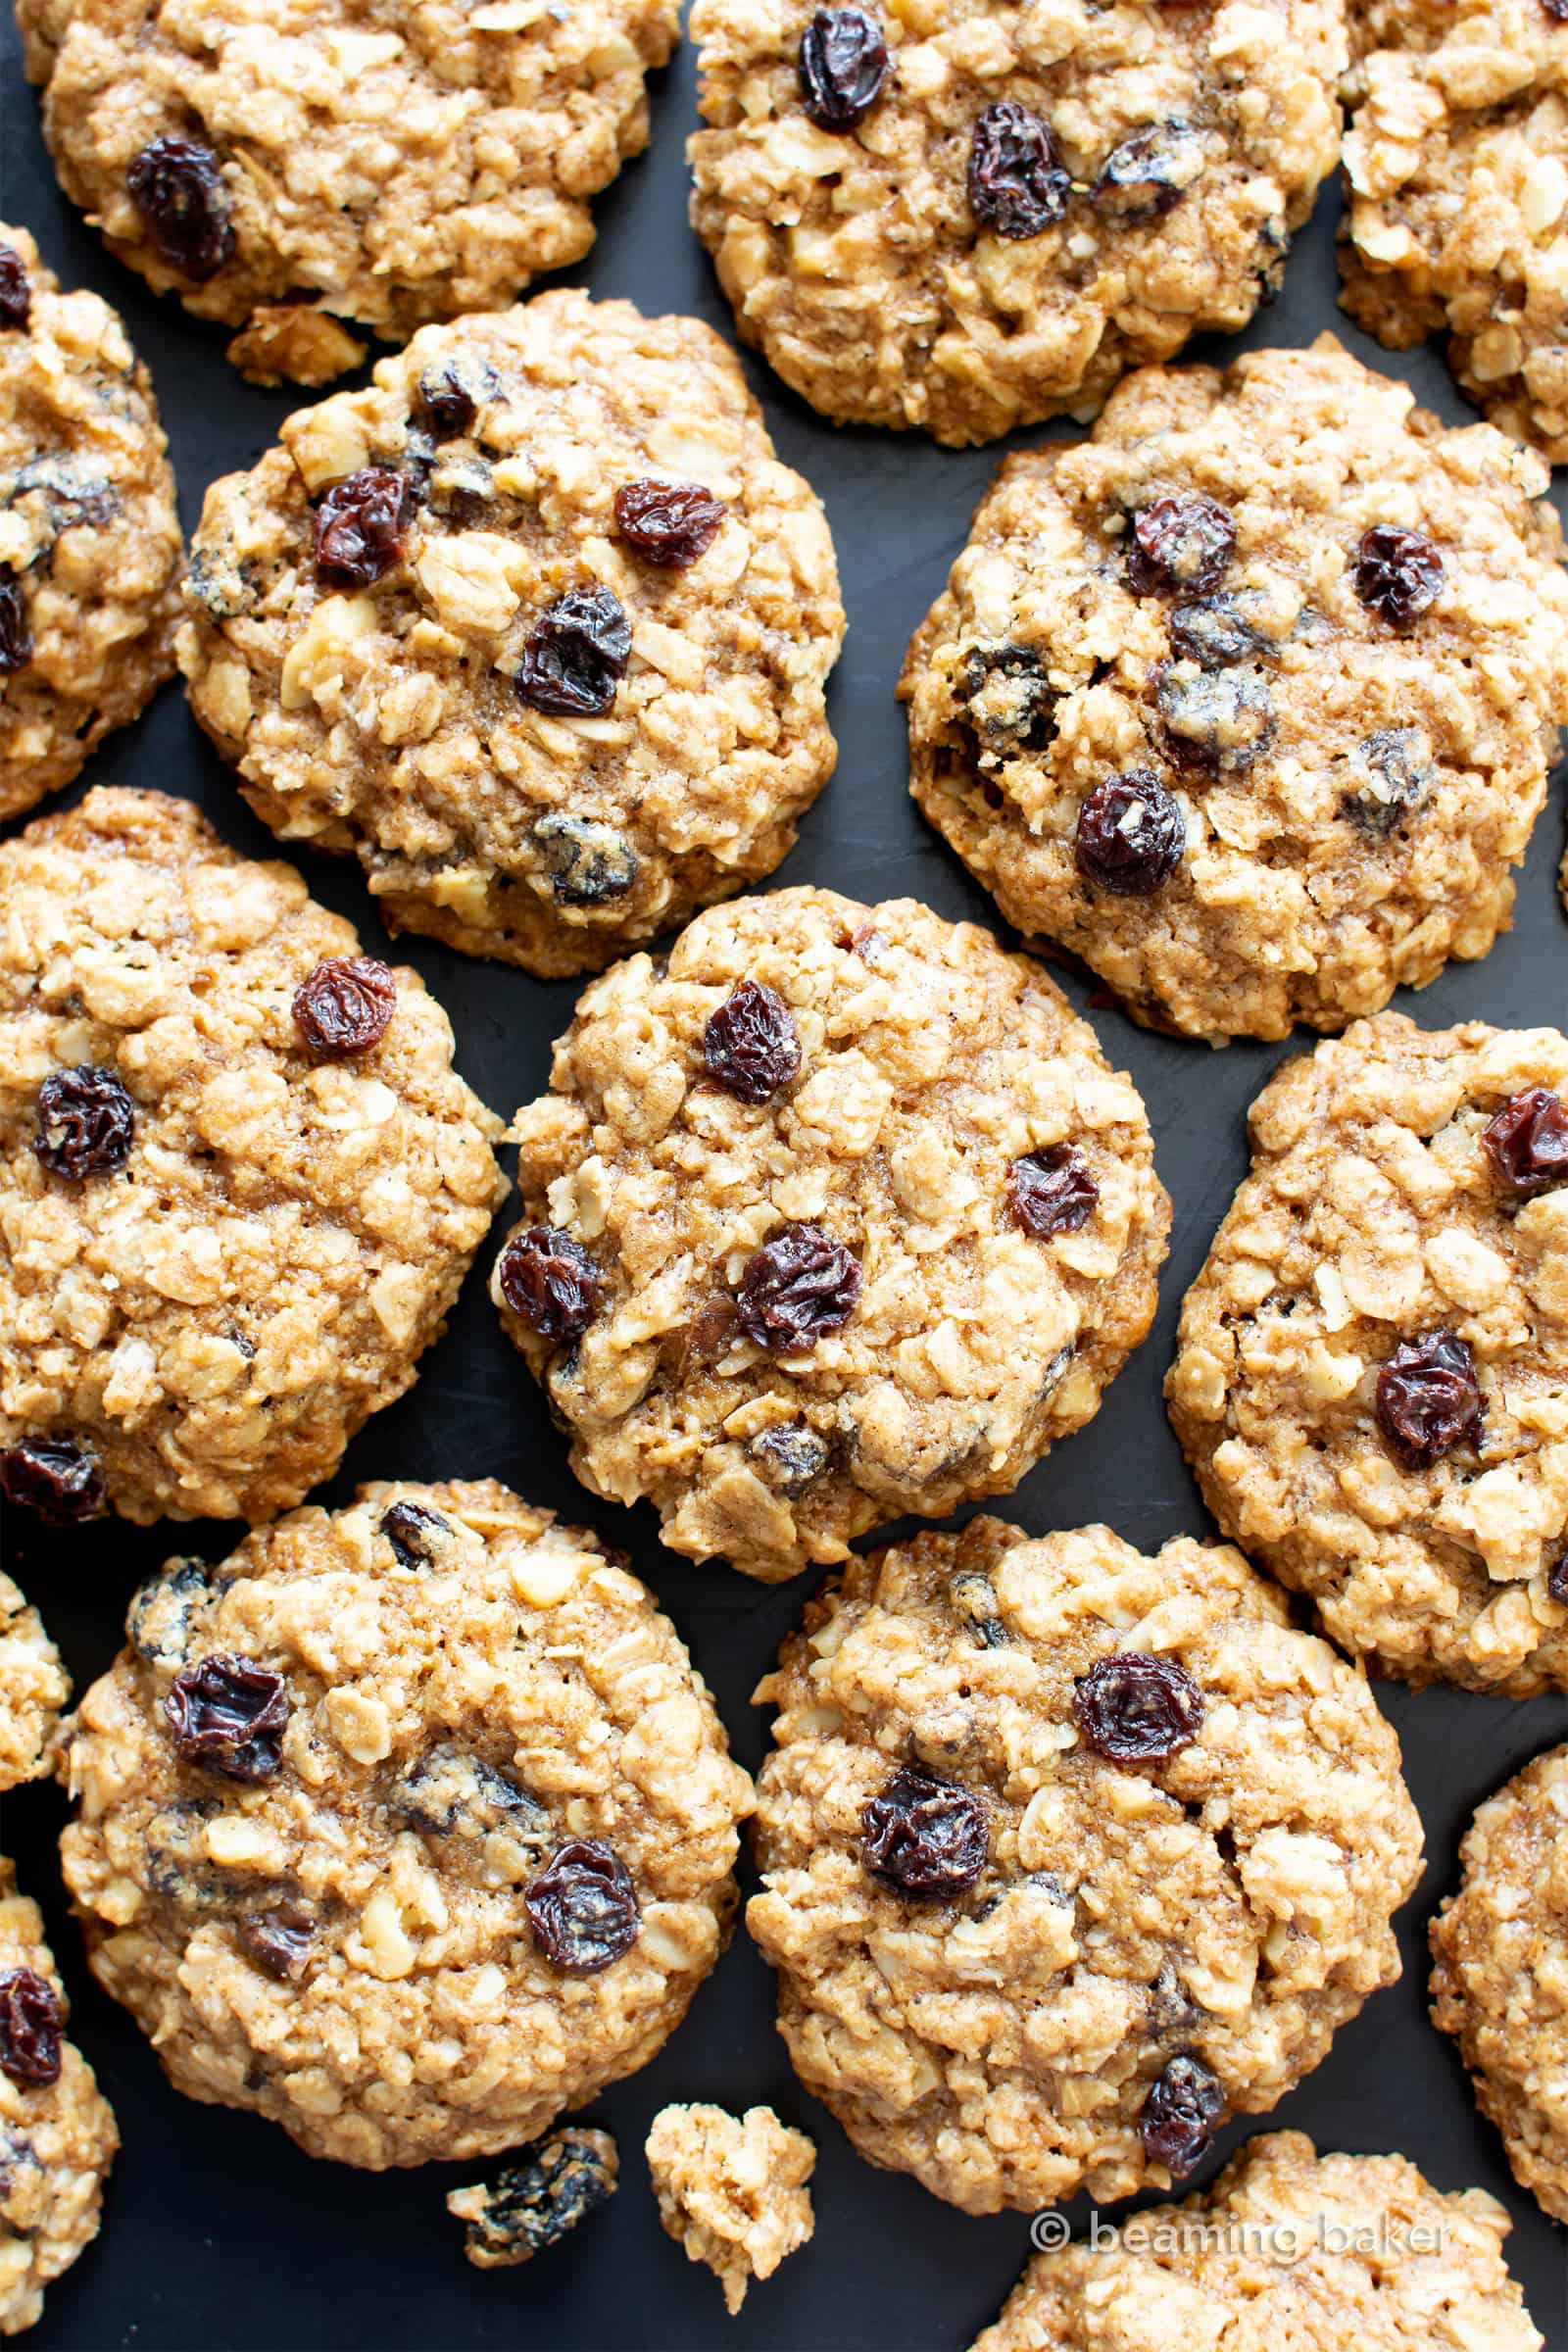 Classic Gluten Free Oatmeal Raisin Cookies Recipe (Vegan, Dairy Free